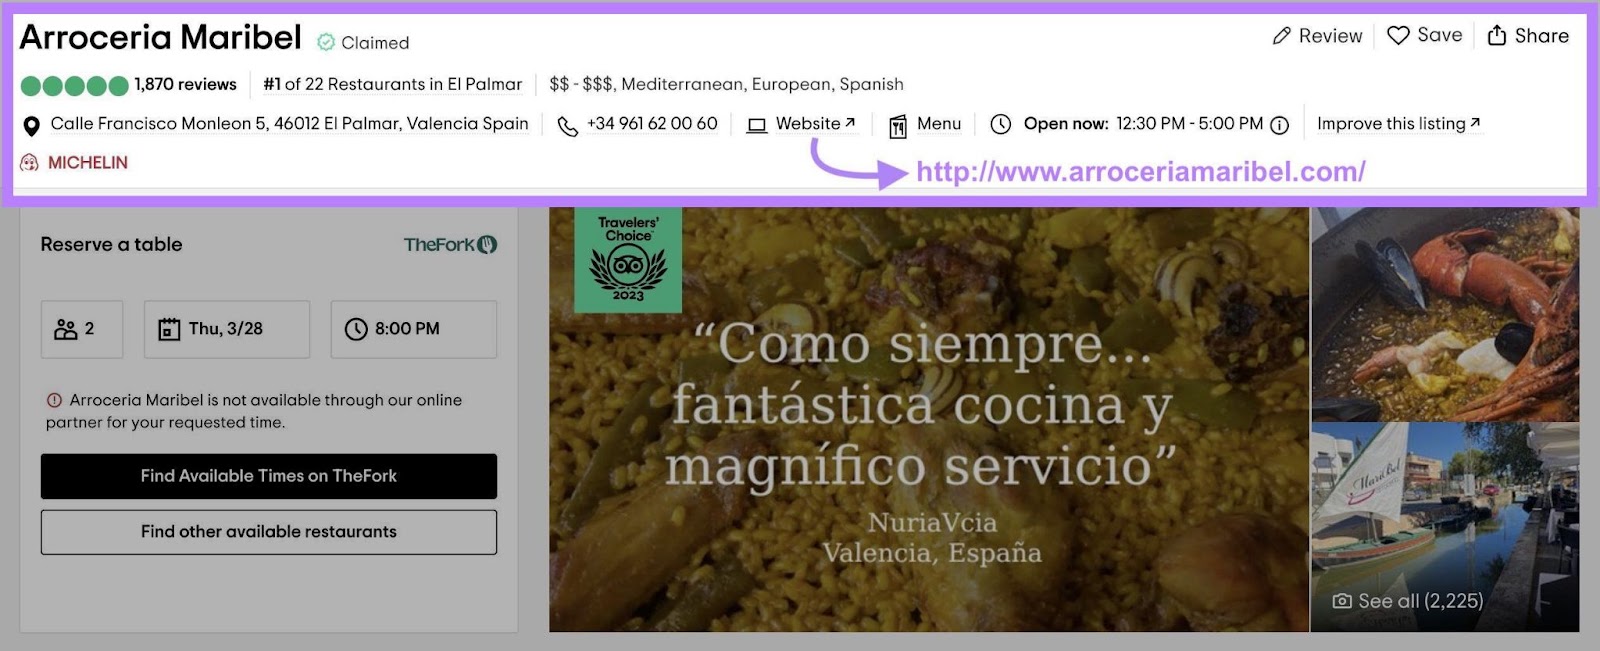 Tripadvisor listing for Spanish restaurant Arroceria Maribel, with s backlink to its website